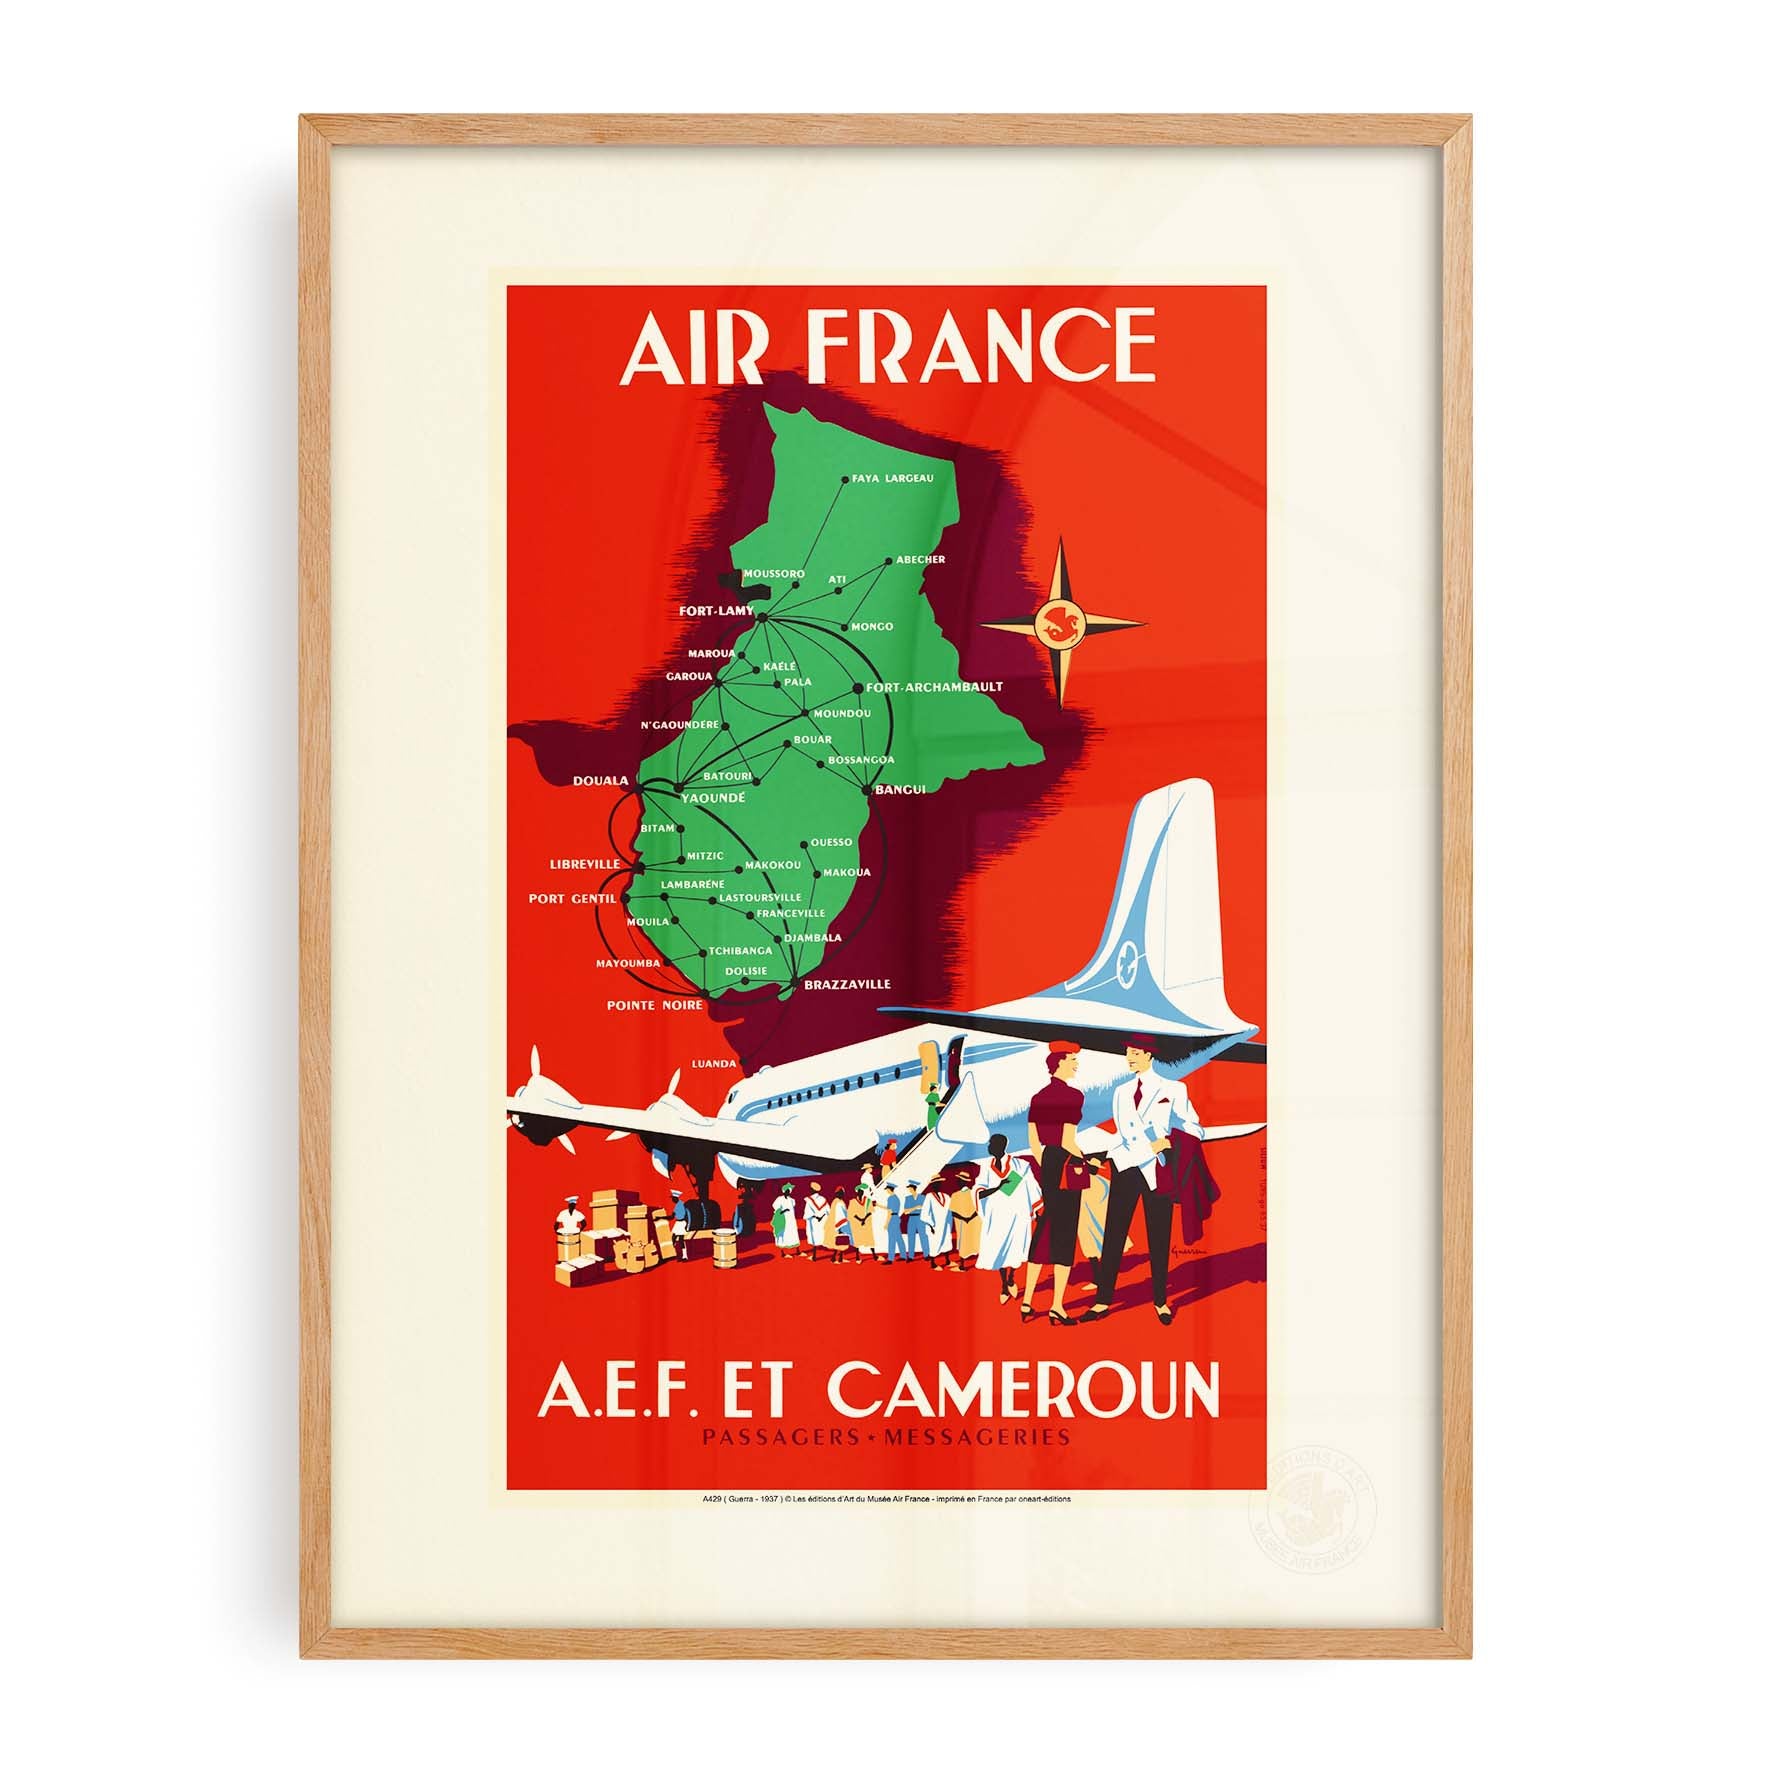 Affiche Air France - AEF et Cameroun-oneart.fr